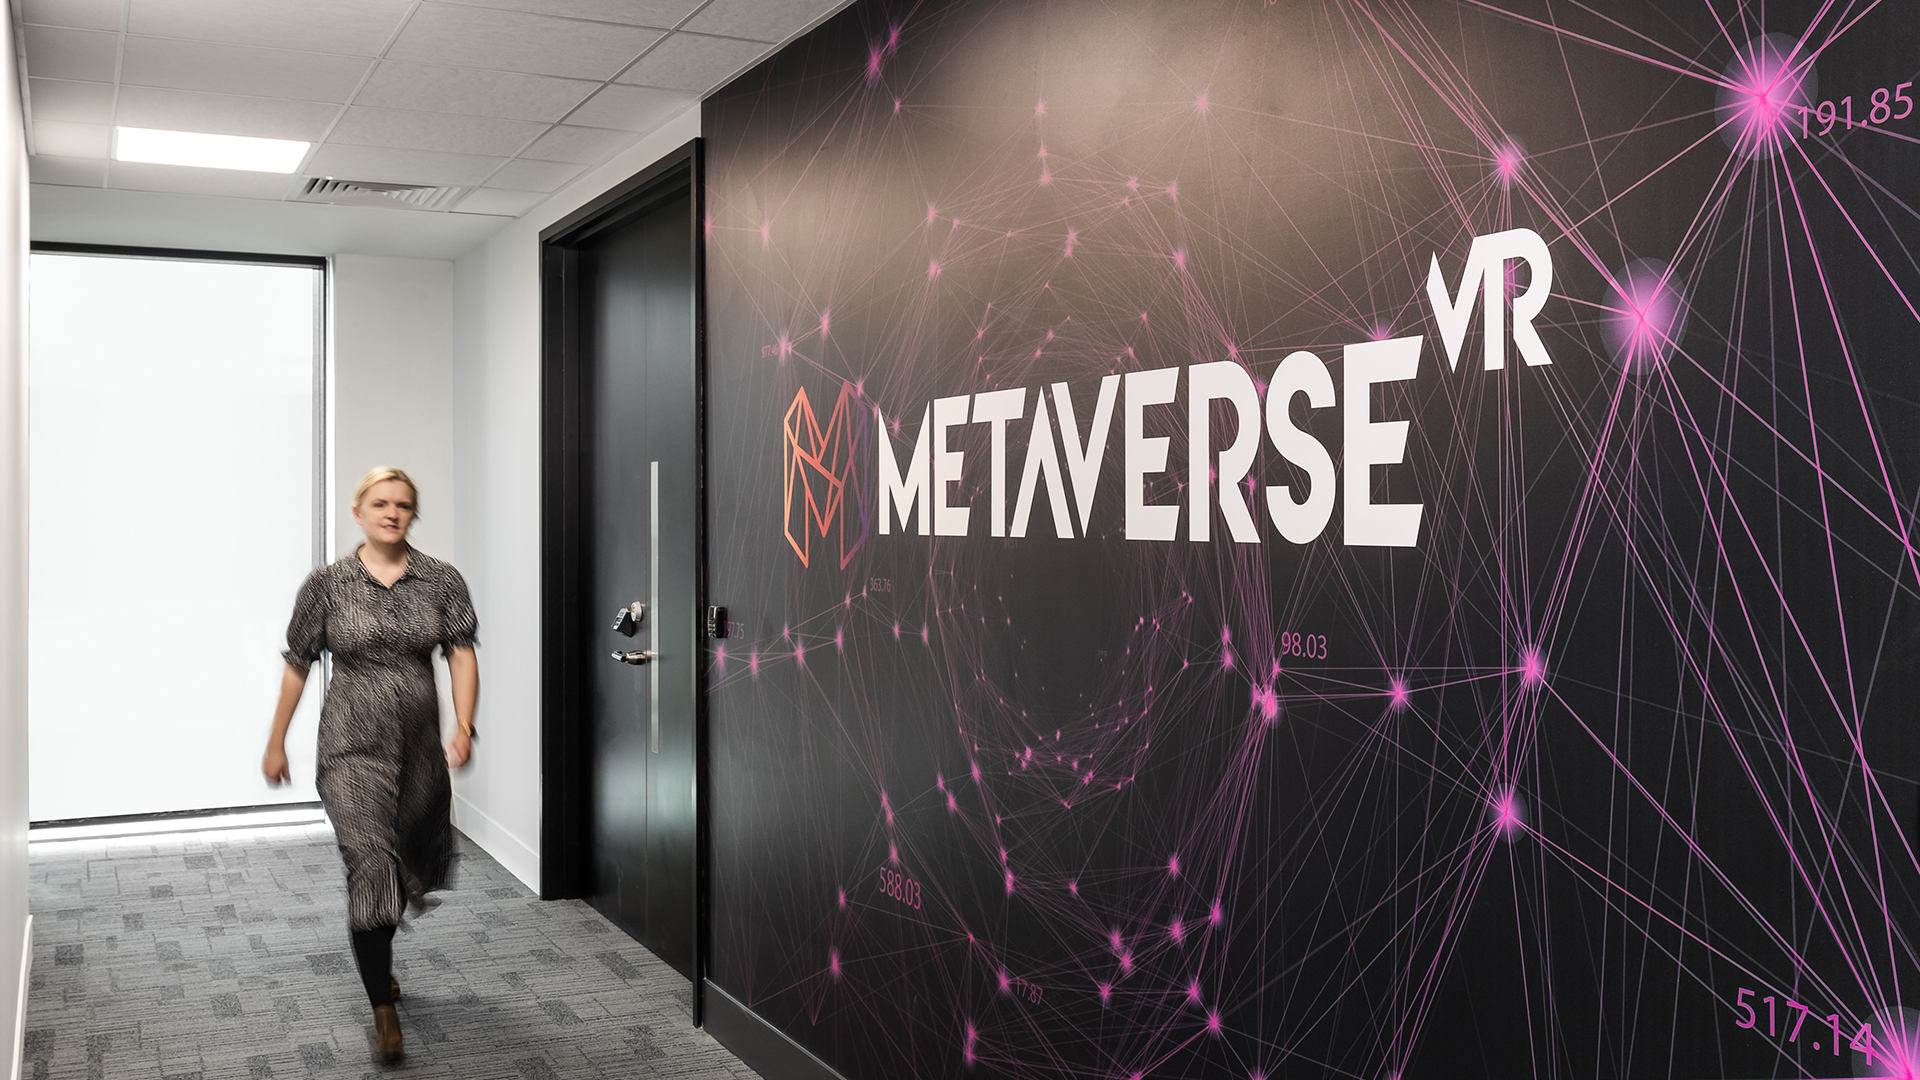 Metaverse VR office